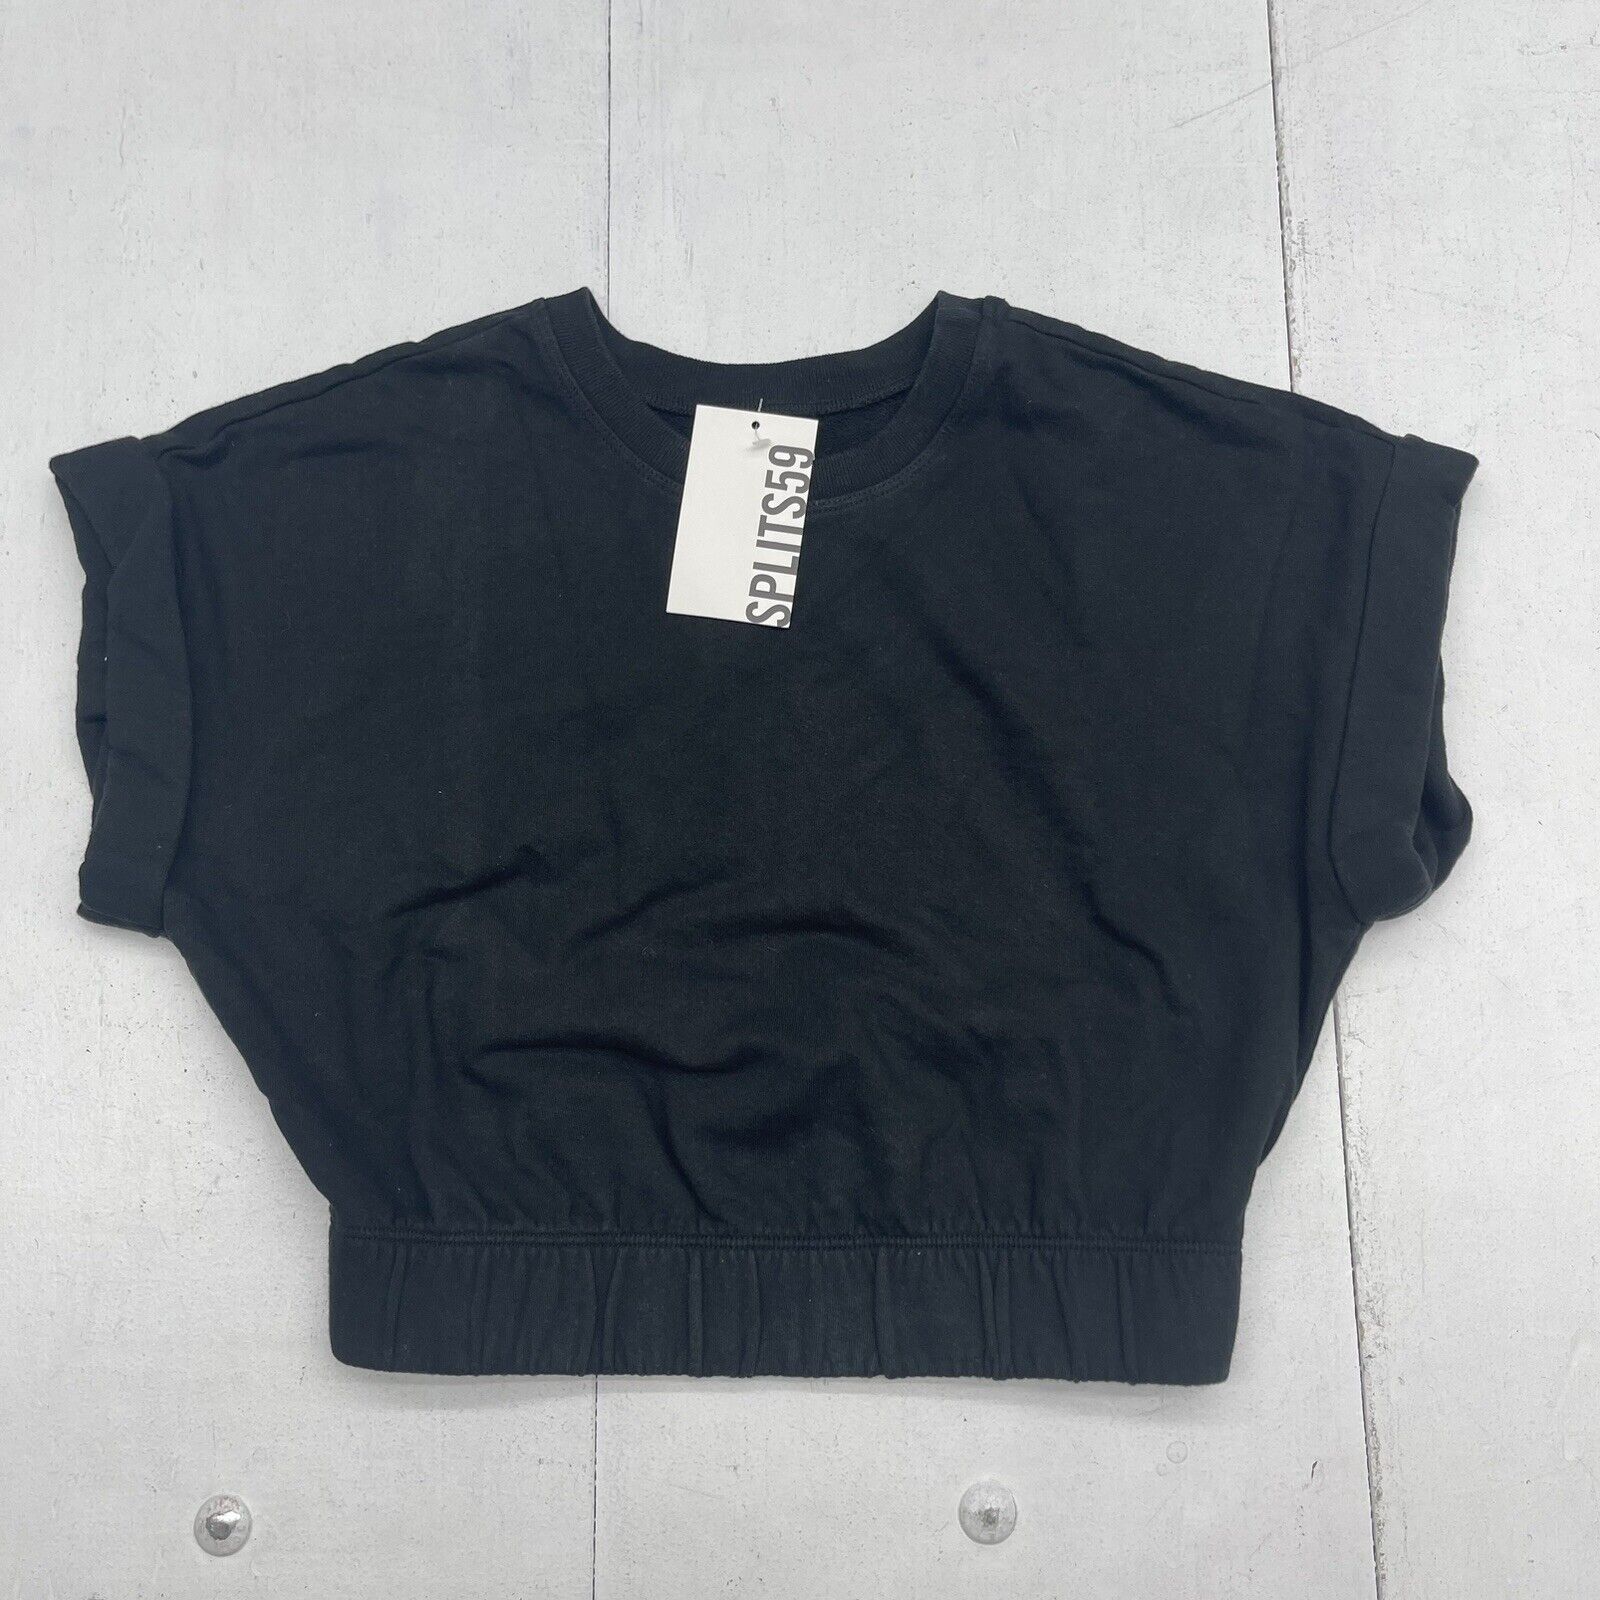 Splits59 French Terry Franky Crop Sweatshirt Black Women’s XS New